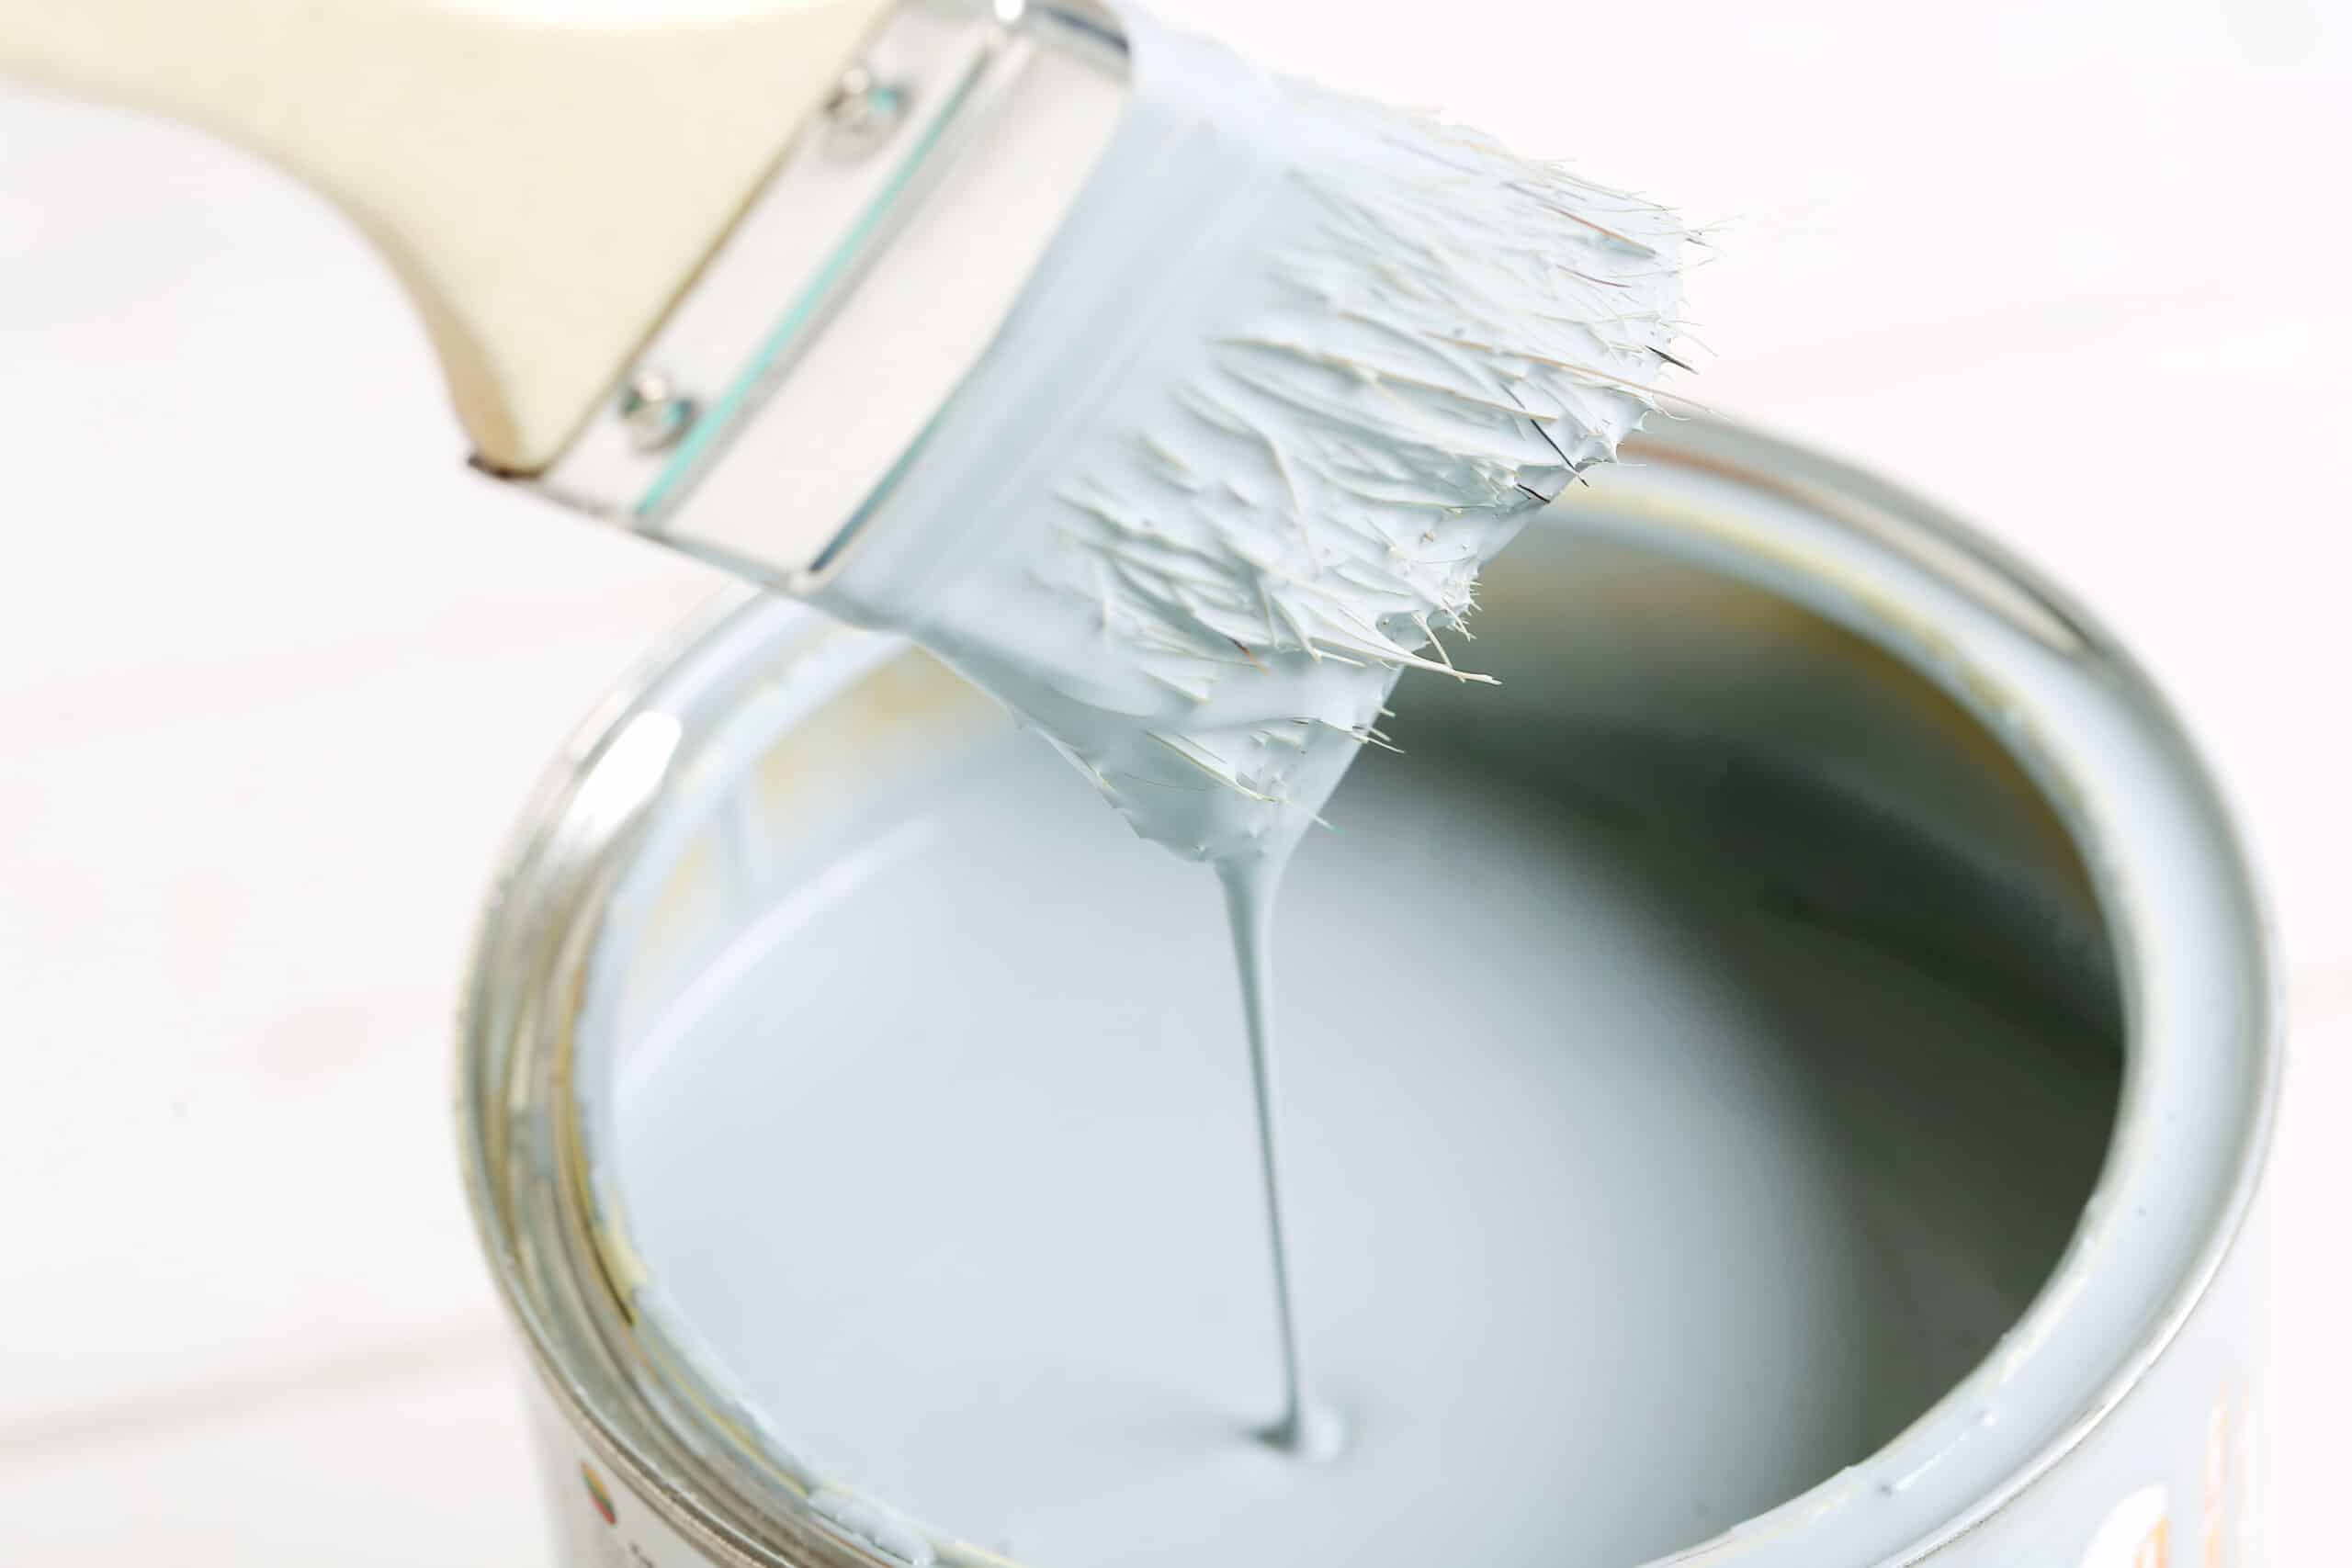 Risks of Lead-Based Paint